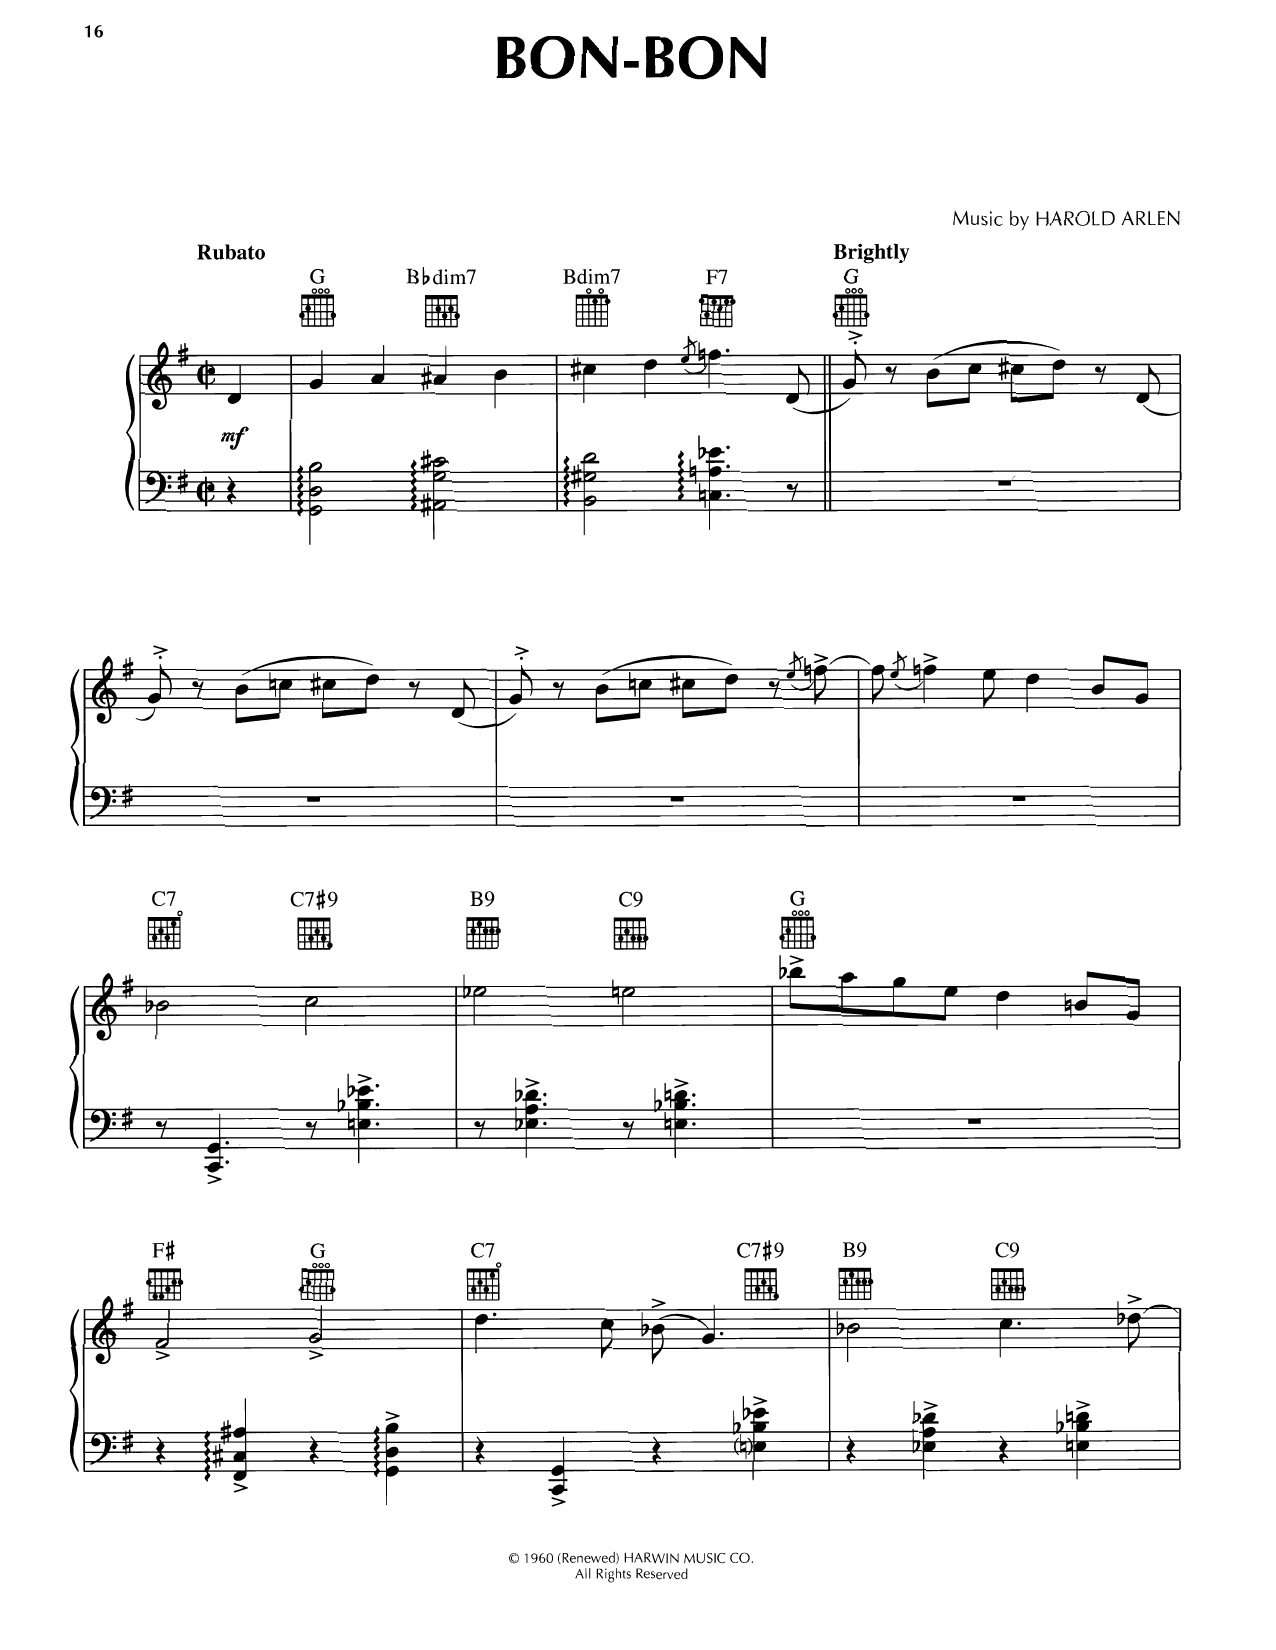 Harold Arlen Bon-Bon Sheet Music Notes & Chords for Piano Solo - Download or Print PDF